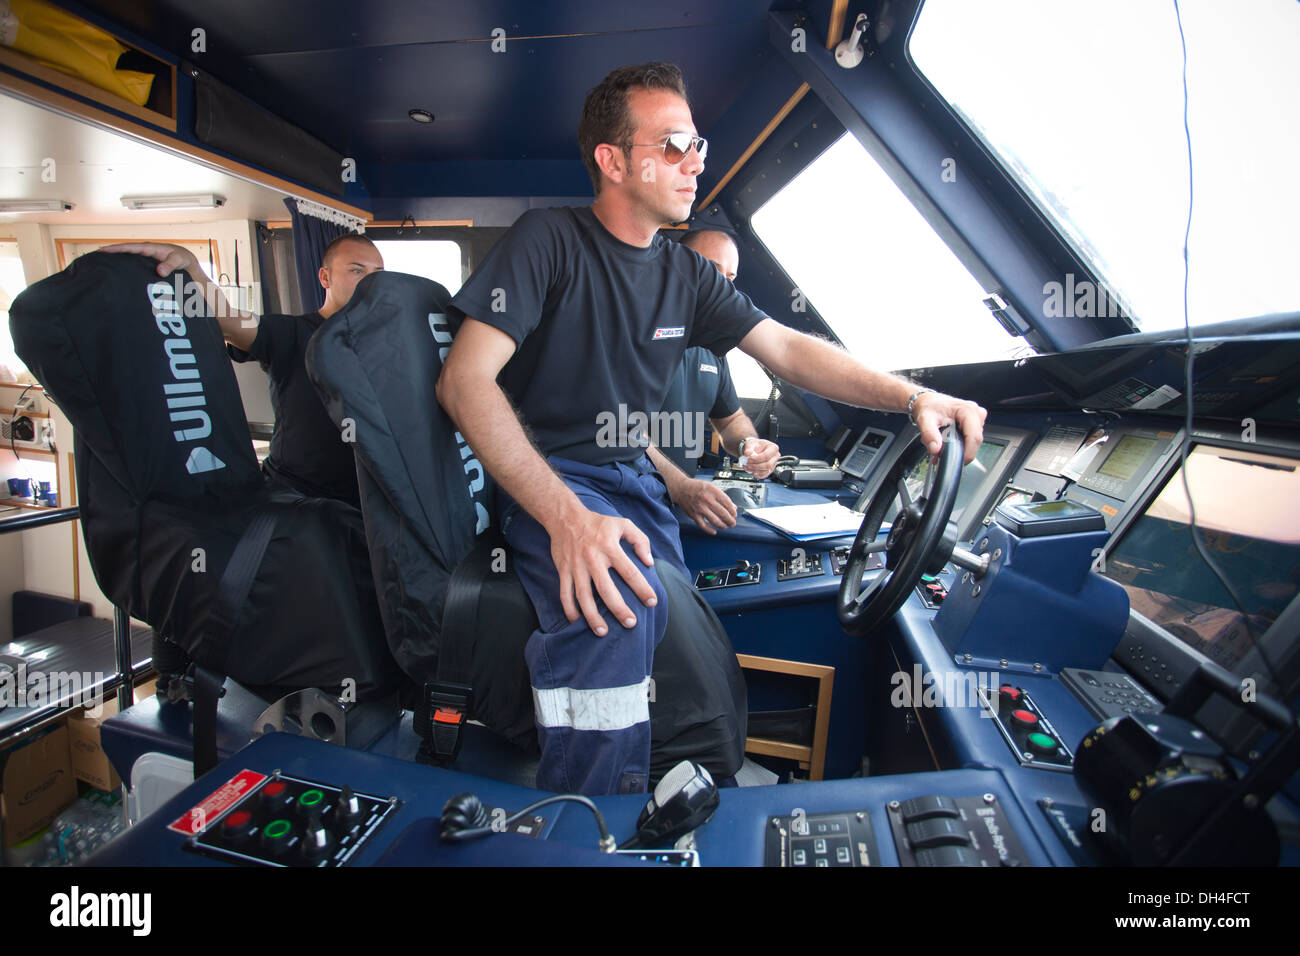 Lampedusa Coastguards, Guardia Costiera Di Lampedusa, Italy Stock Photo